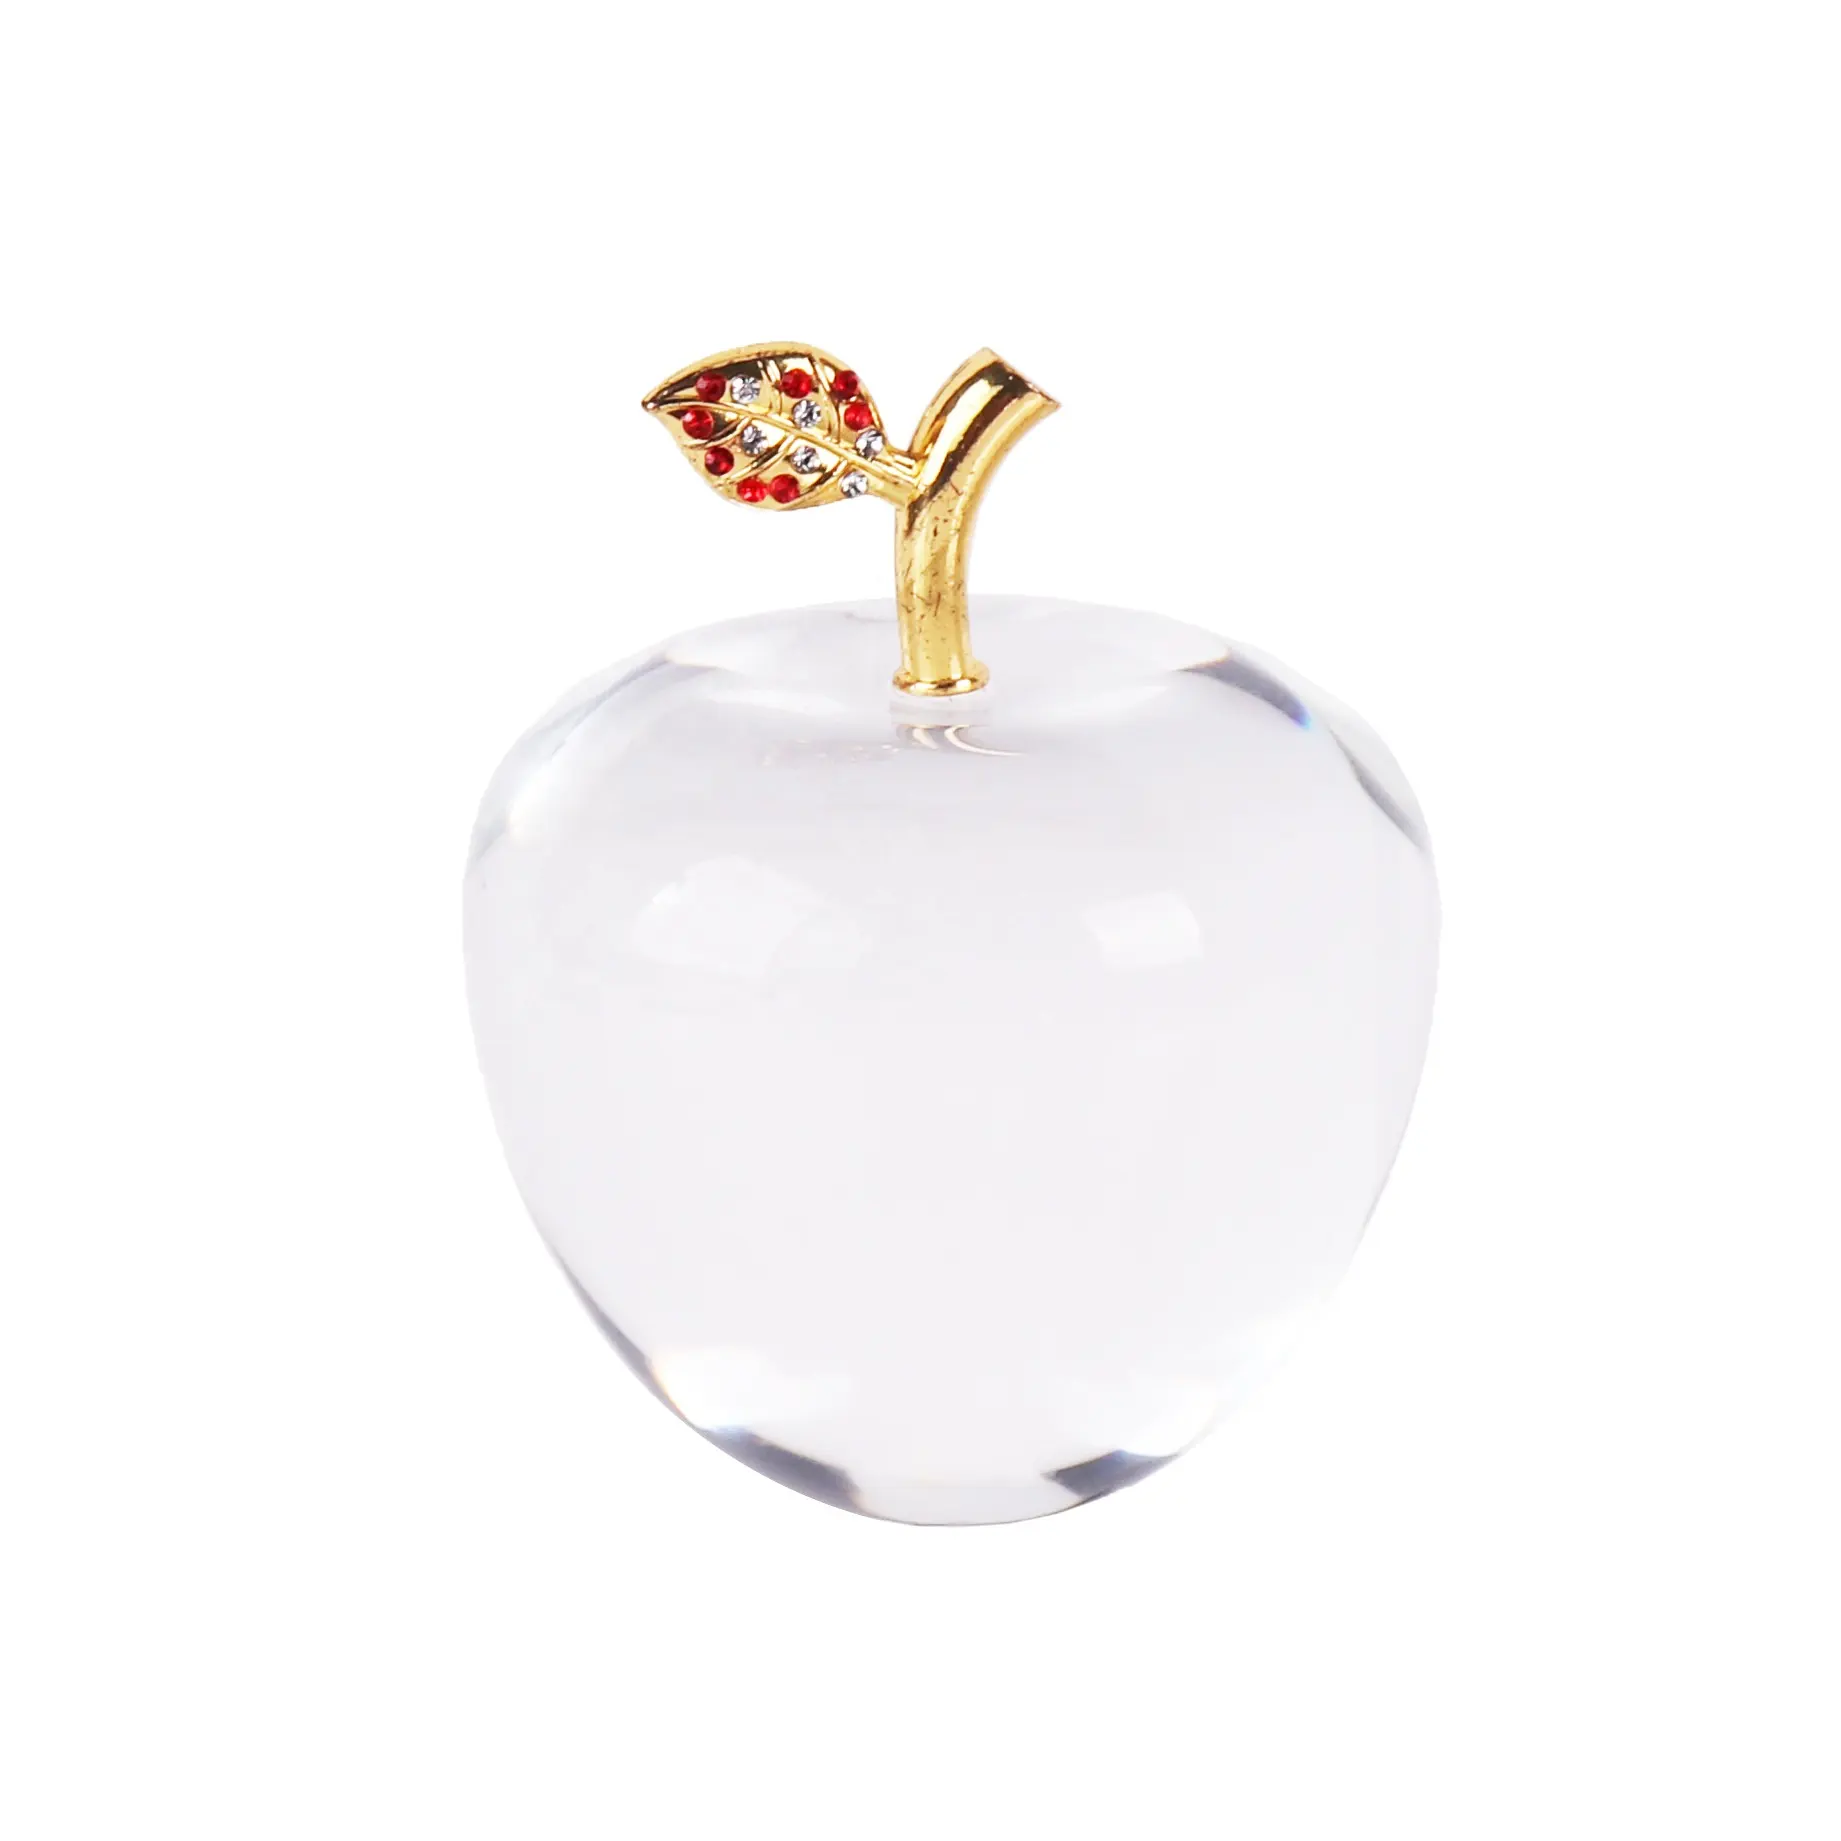 Crystal Apple Glossy Crystal Apple Ornaments Christmas Eve Gift Send Girlfriend Birthday Gift Christmas Gift